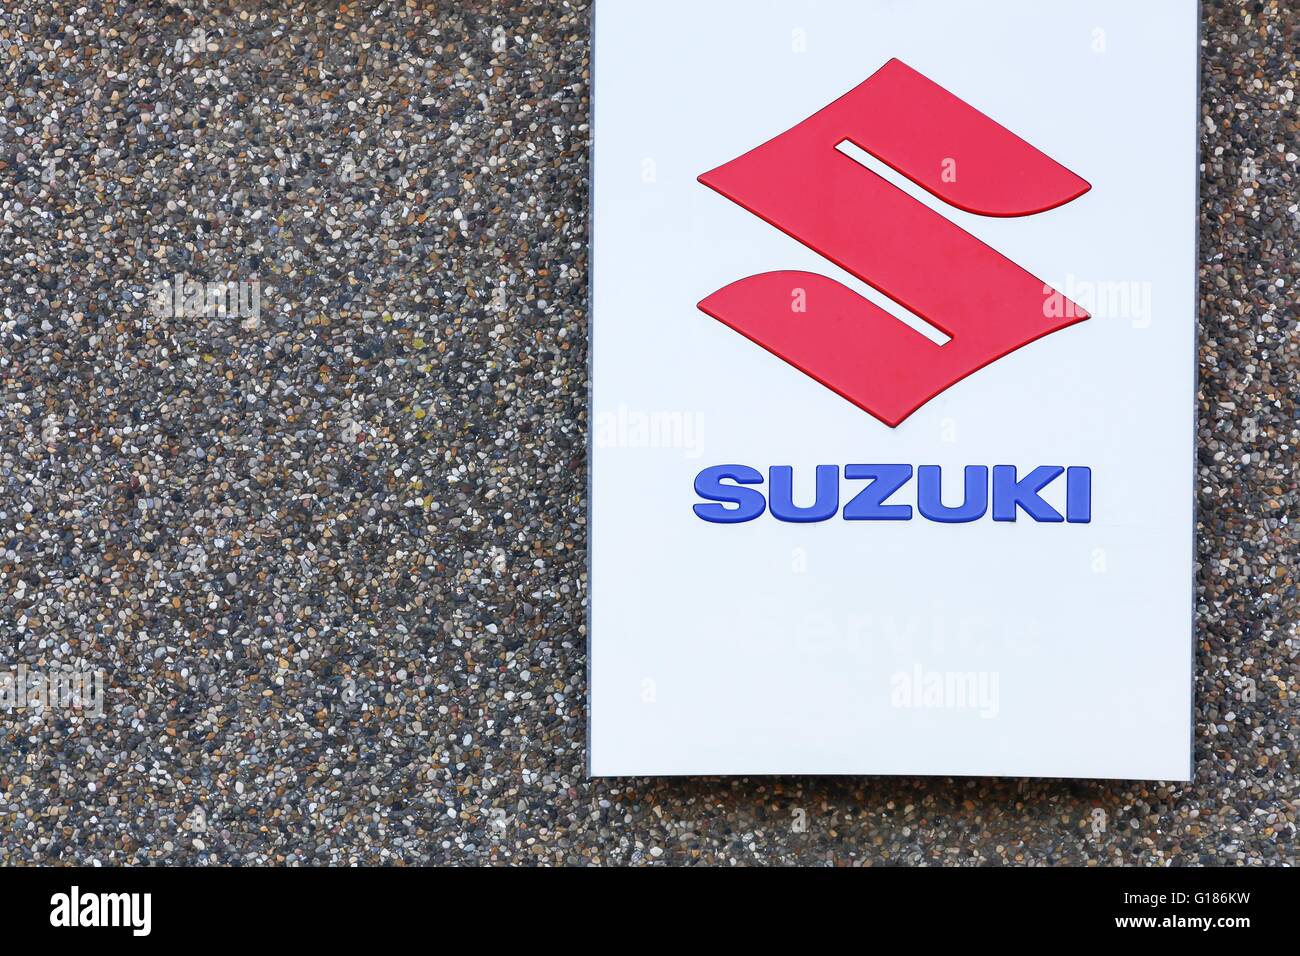 Suzuki logo on a wall Stock Photo